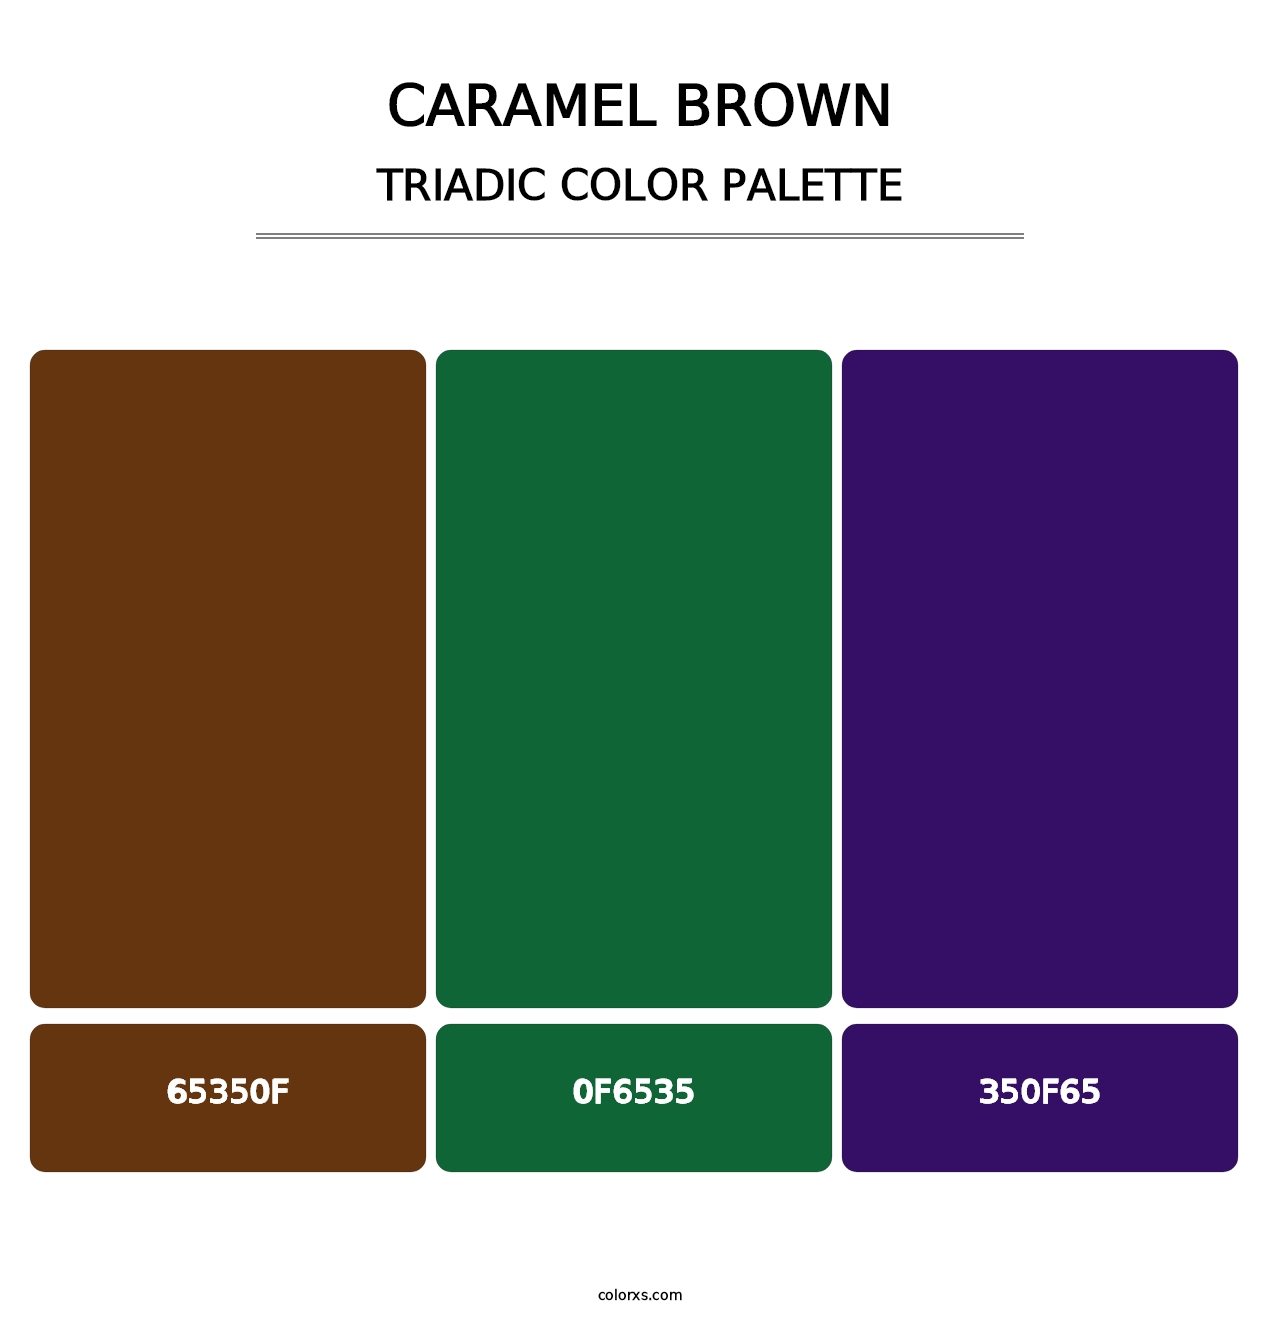 Caramel Brown - Triadic Color Palette